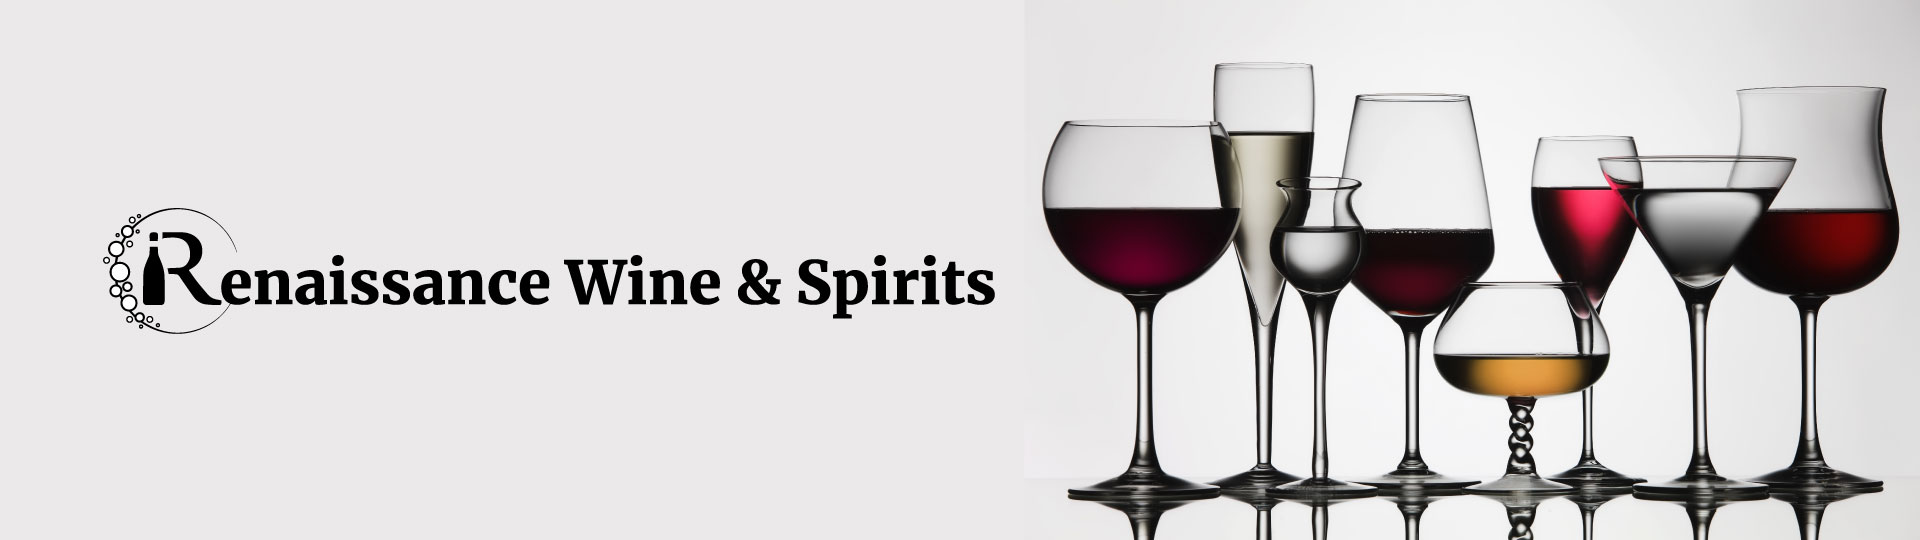 Renaissance Wine and Spirits